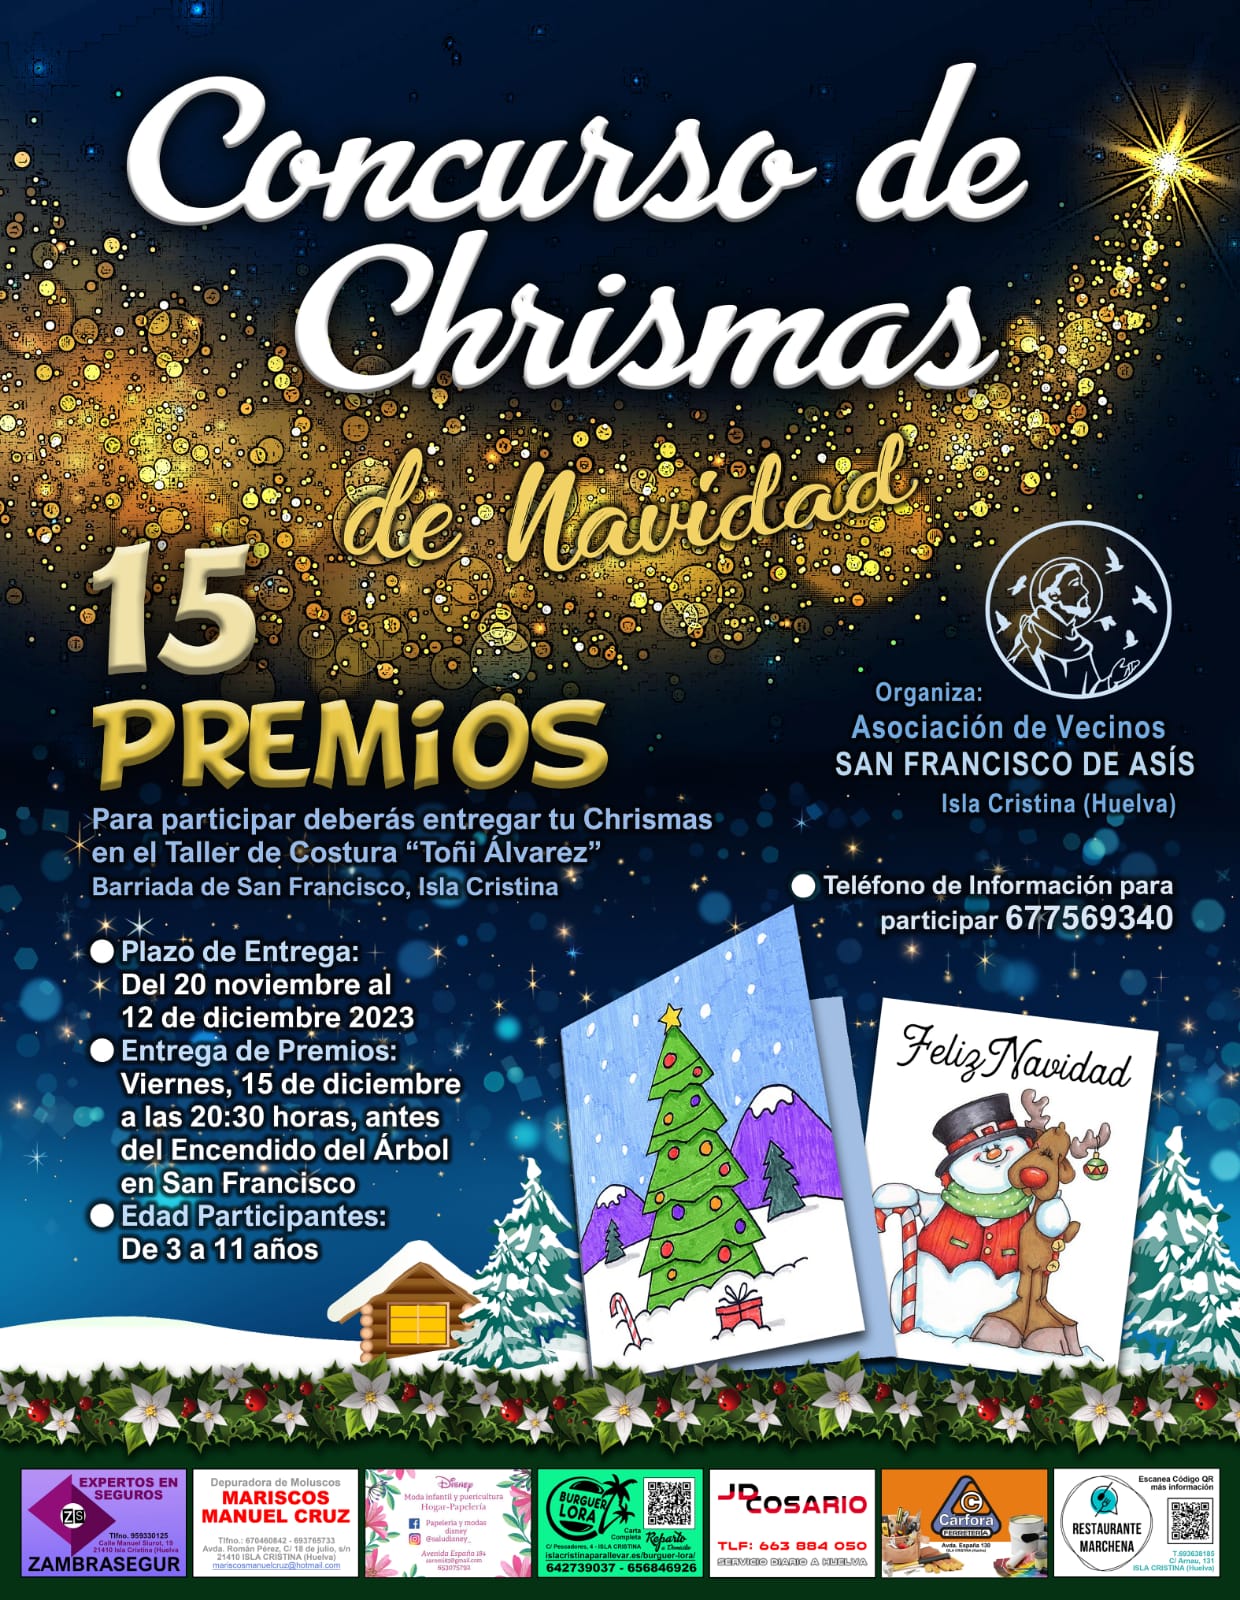 Concurso de Crismas en Navidad, Barriada de San Francisco, Isla Cristina.